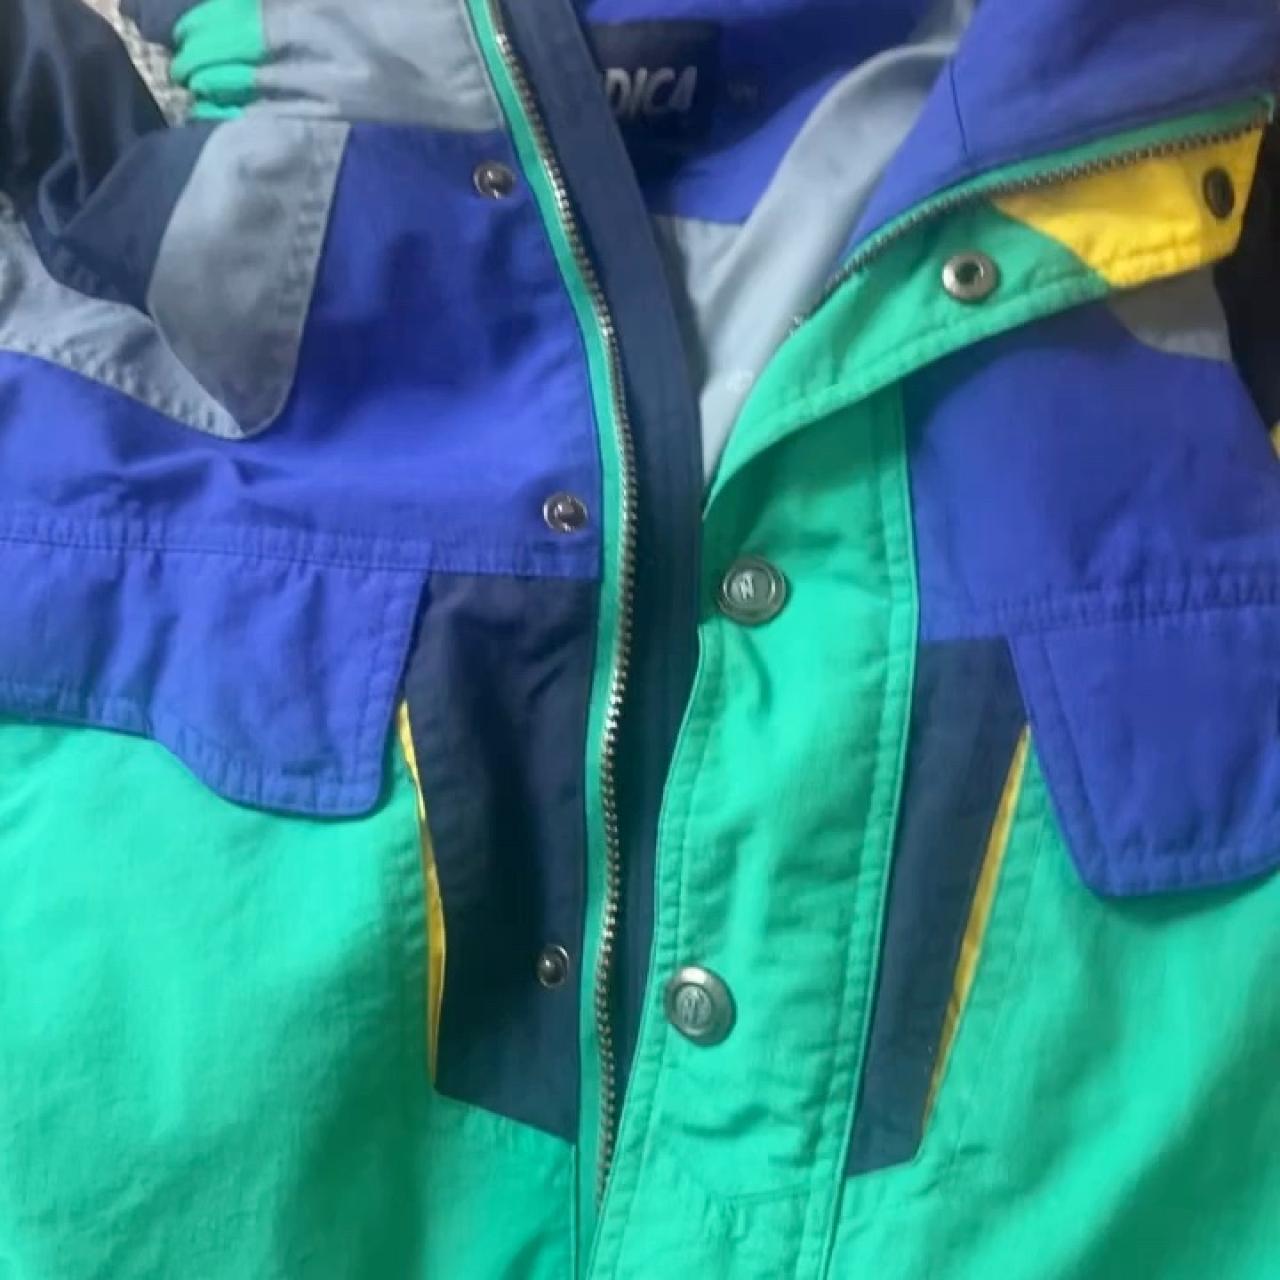 Nordica Men's Green and Blue Jacket | Depop